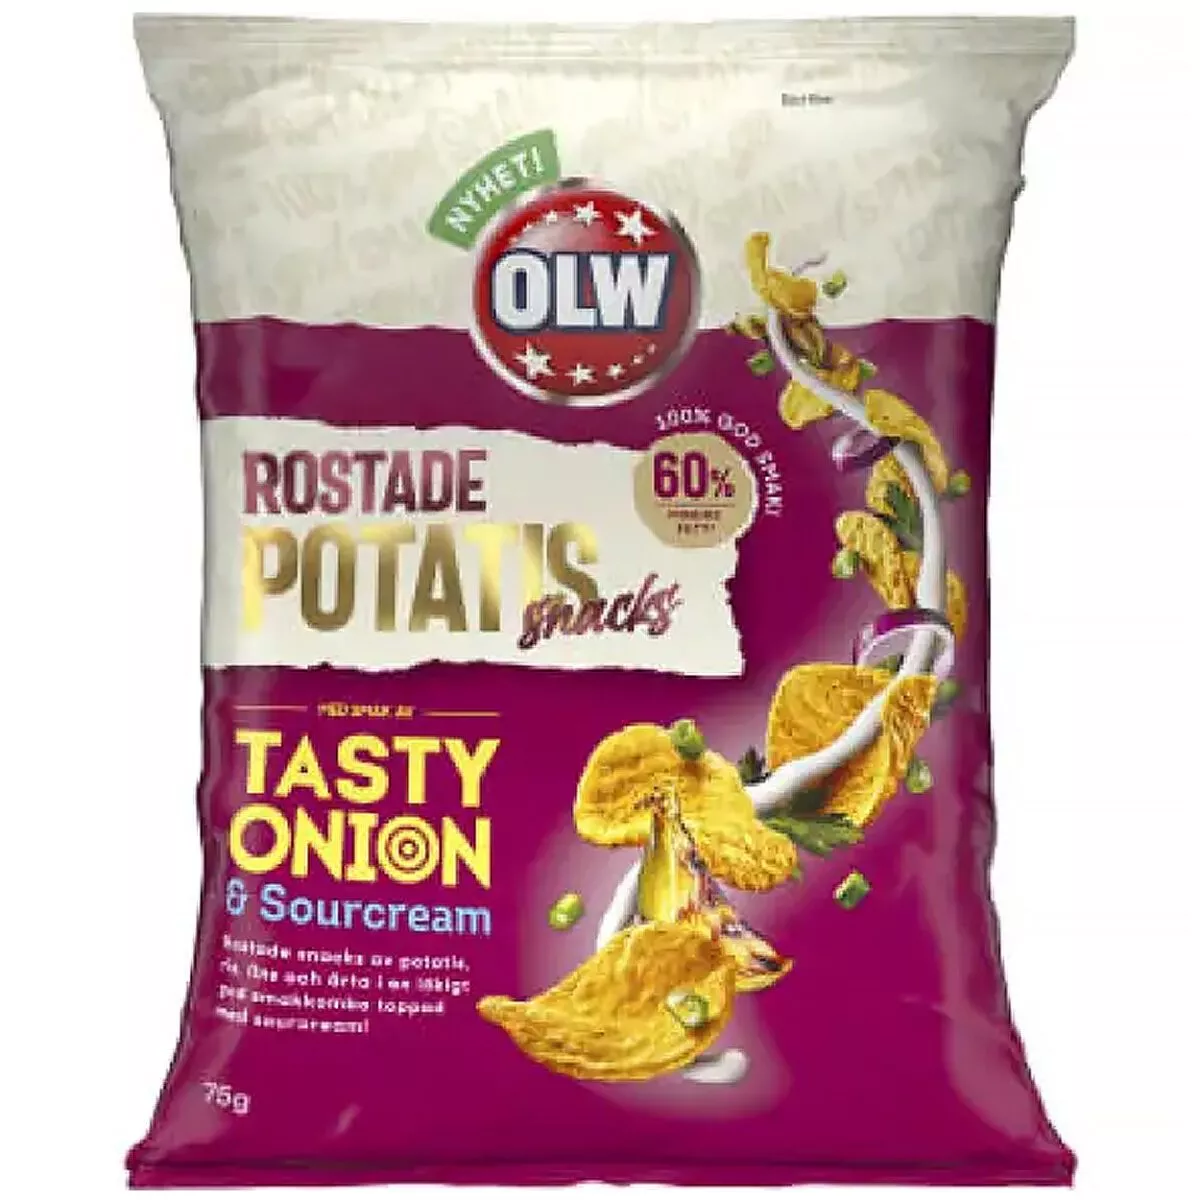 OLW Potatissnacks Tasty Onion & Sourcream (75g) 1